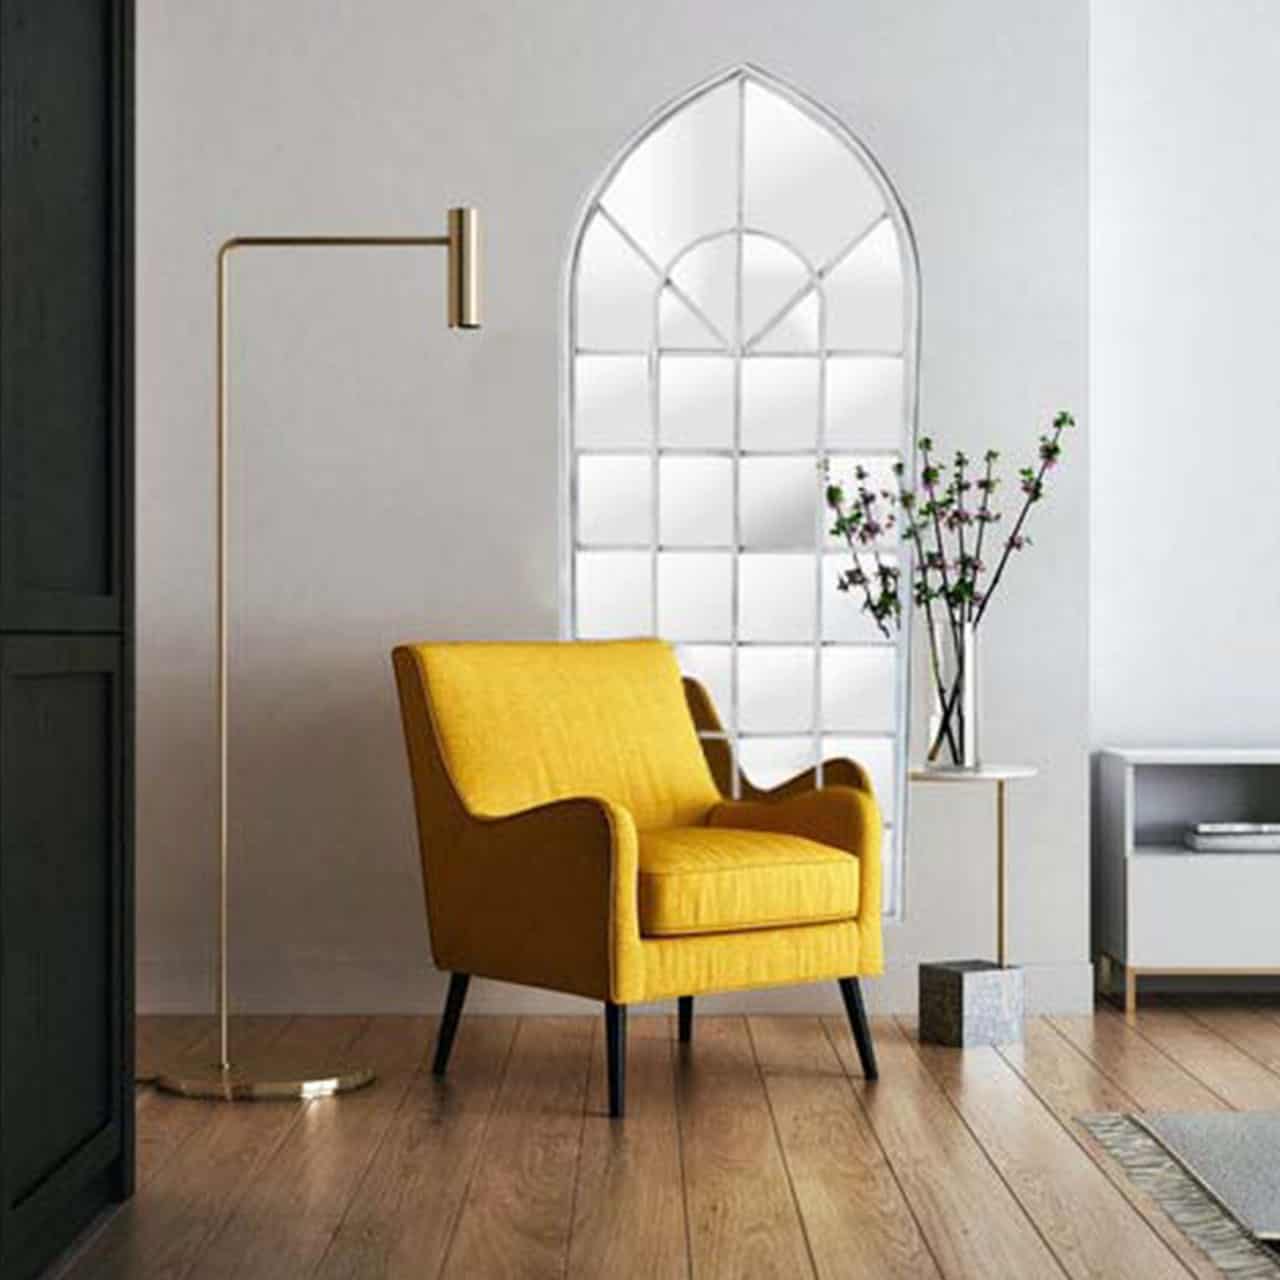 Softy Homes - Wall Mirror